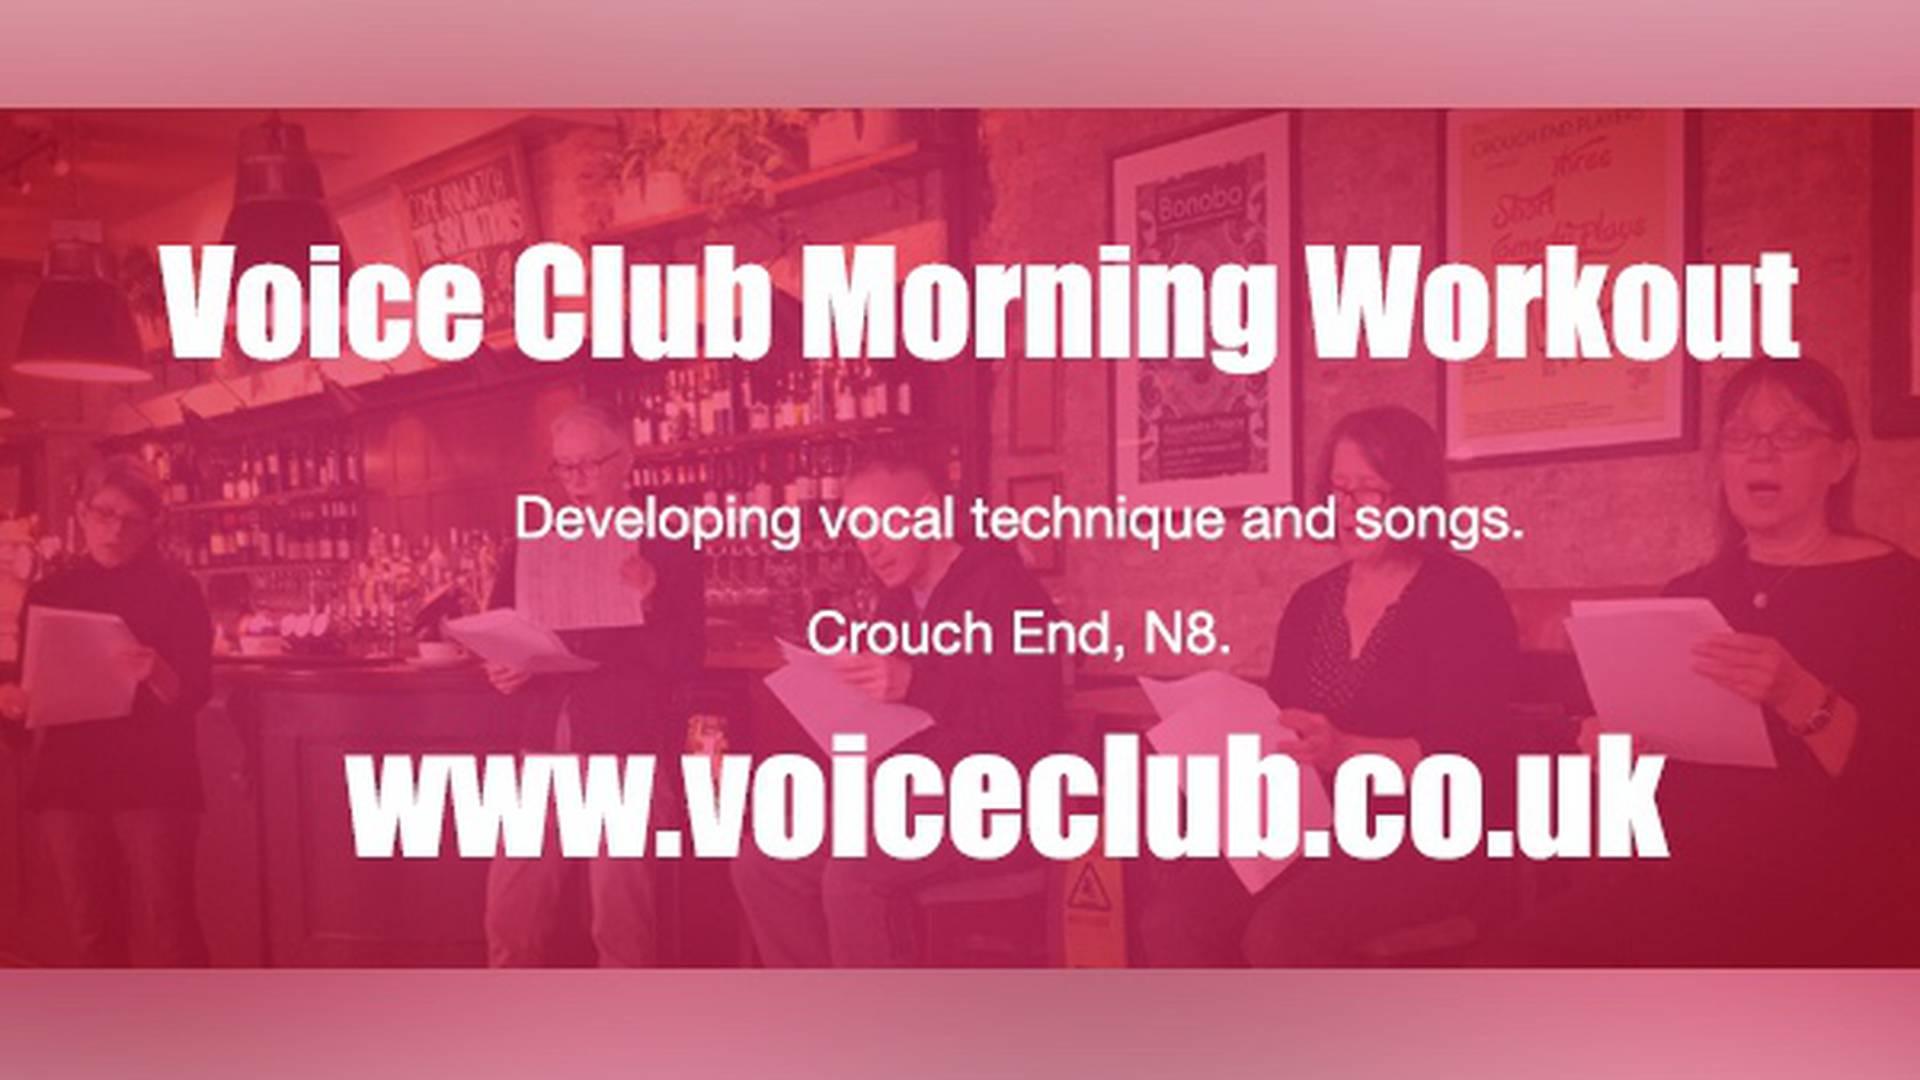 The Voice Club photo